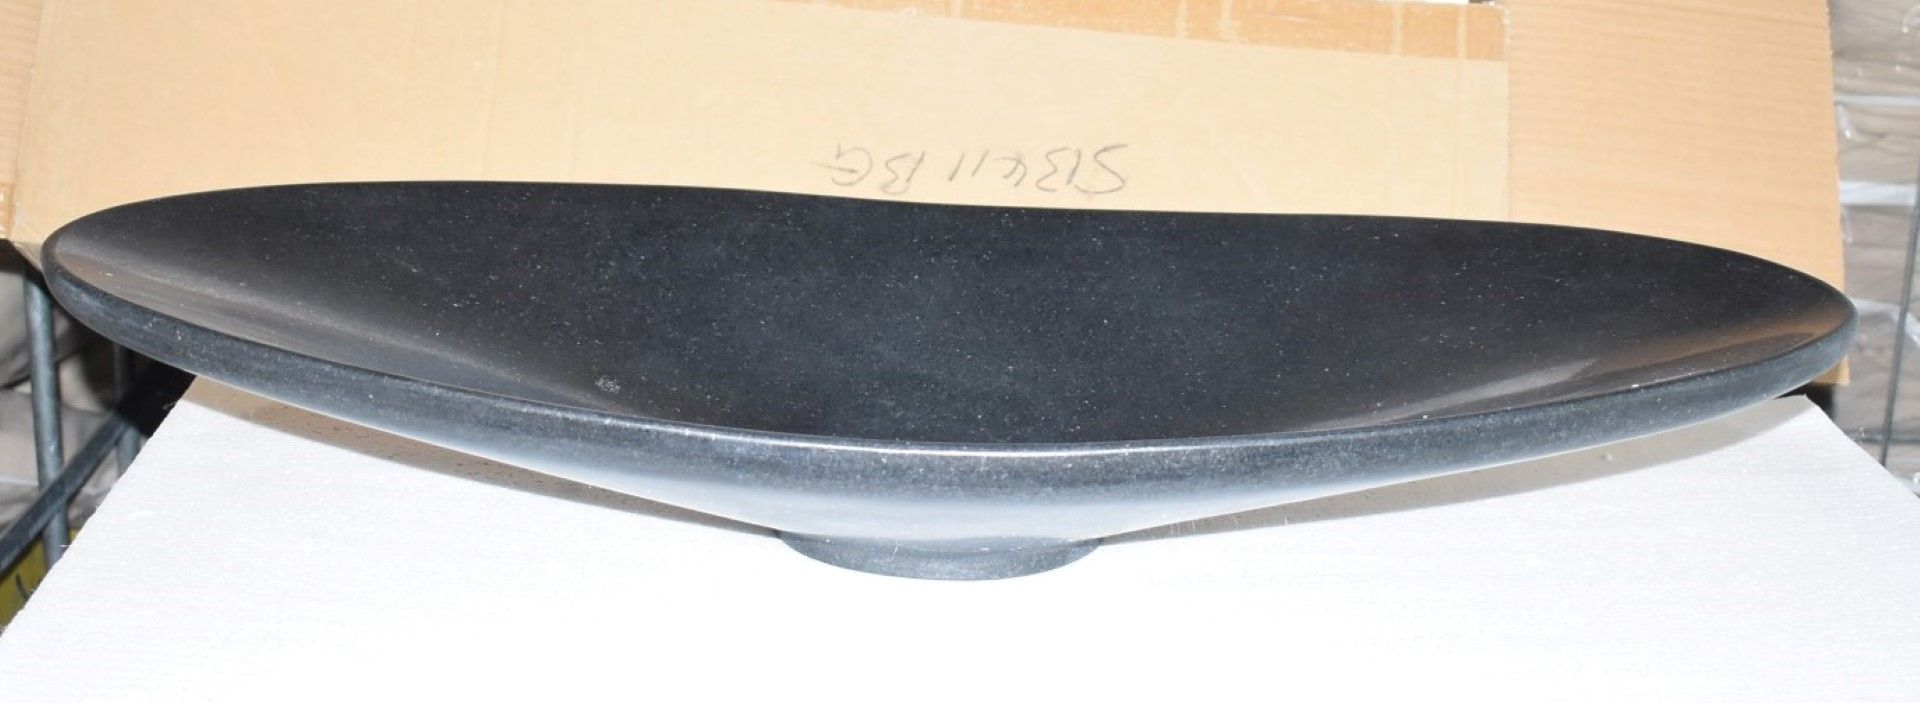 1 x Stonearth 'Cyra' Black Granite Stone Countertop Sink Basin - New Boxed Stock - RRP £620 - - Image 7 of 10